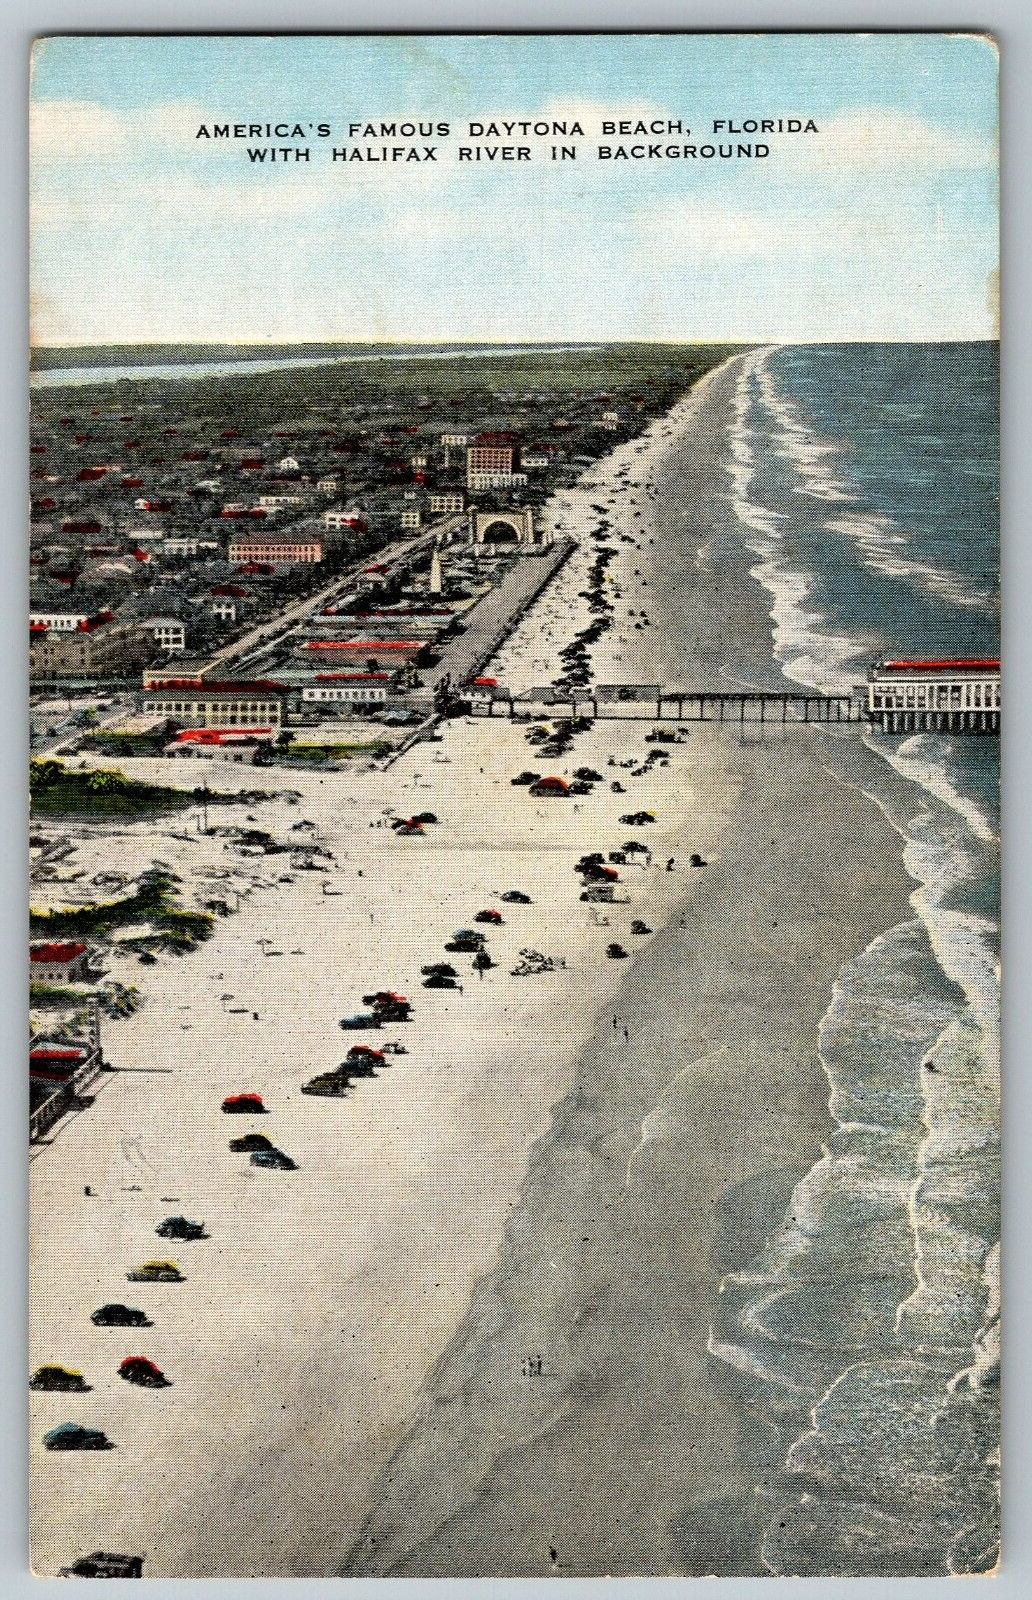 Daytona Beach, FL- Daytona Beach Known as Natural Speedway - Vintage Postcard